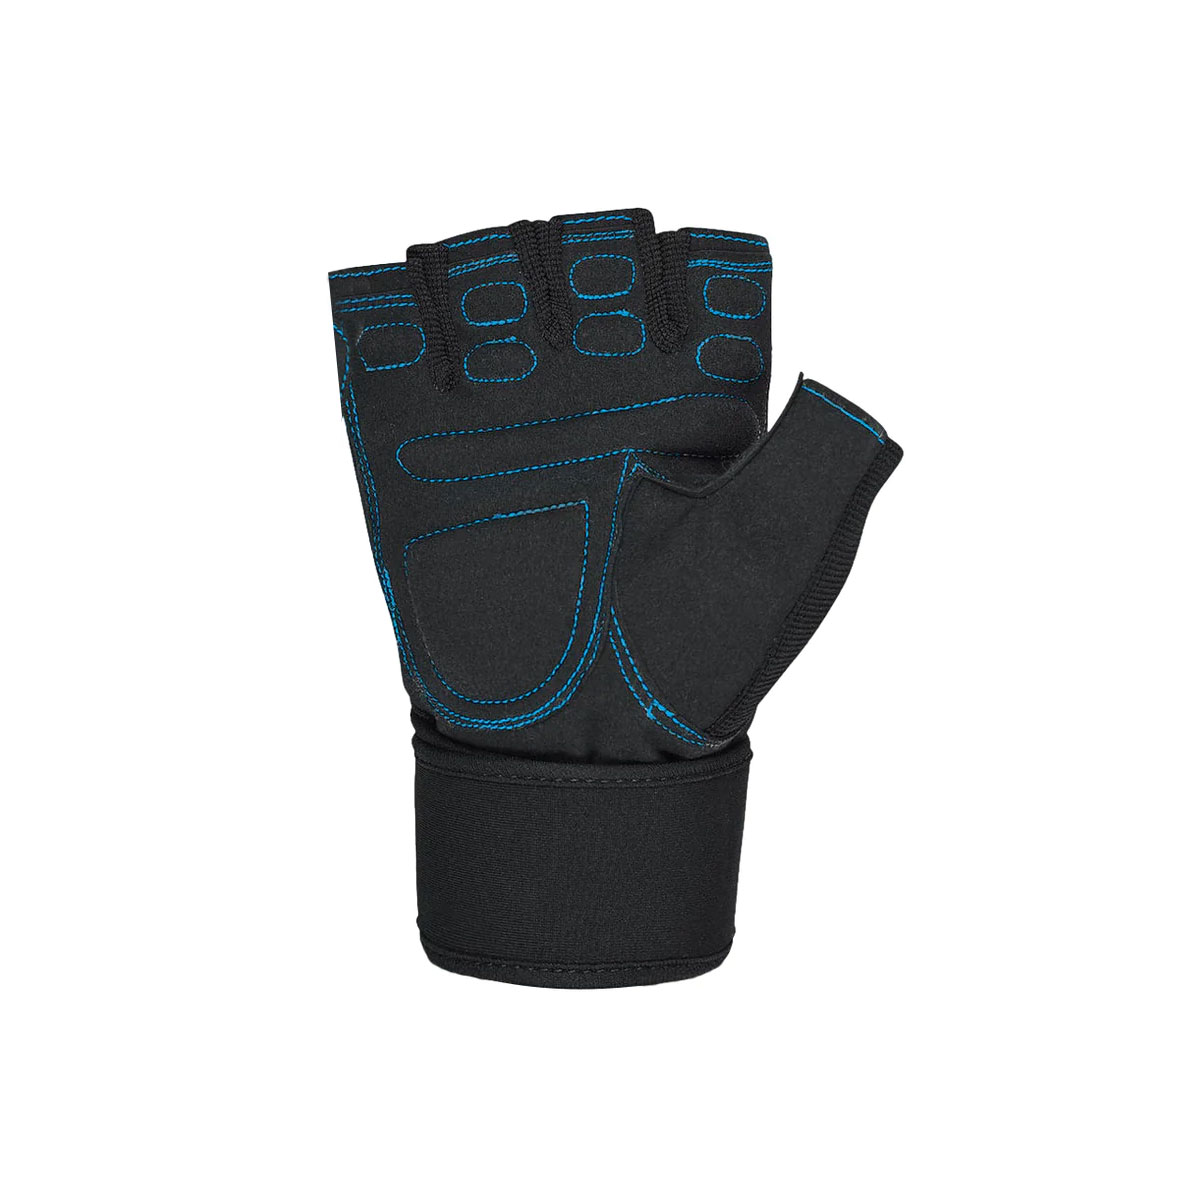 Cut Palm Designed Gym Gloves